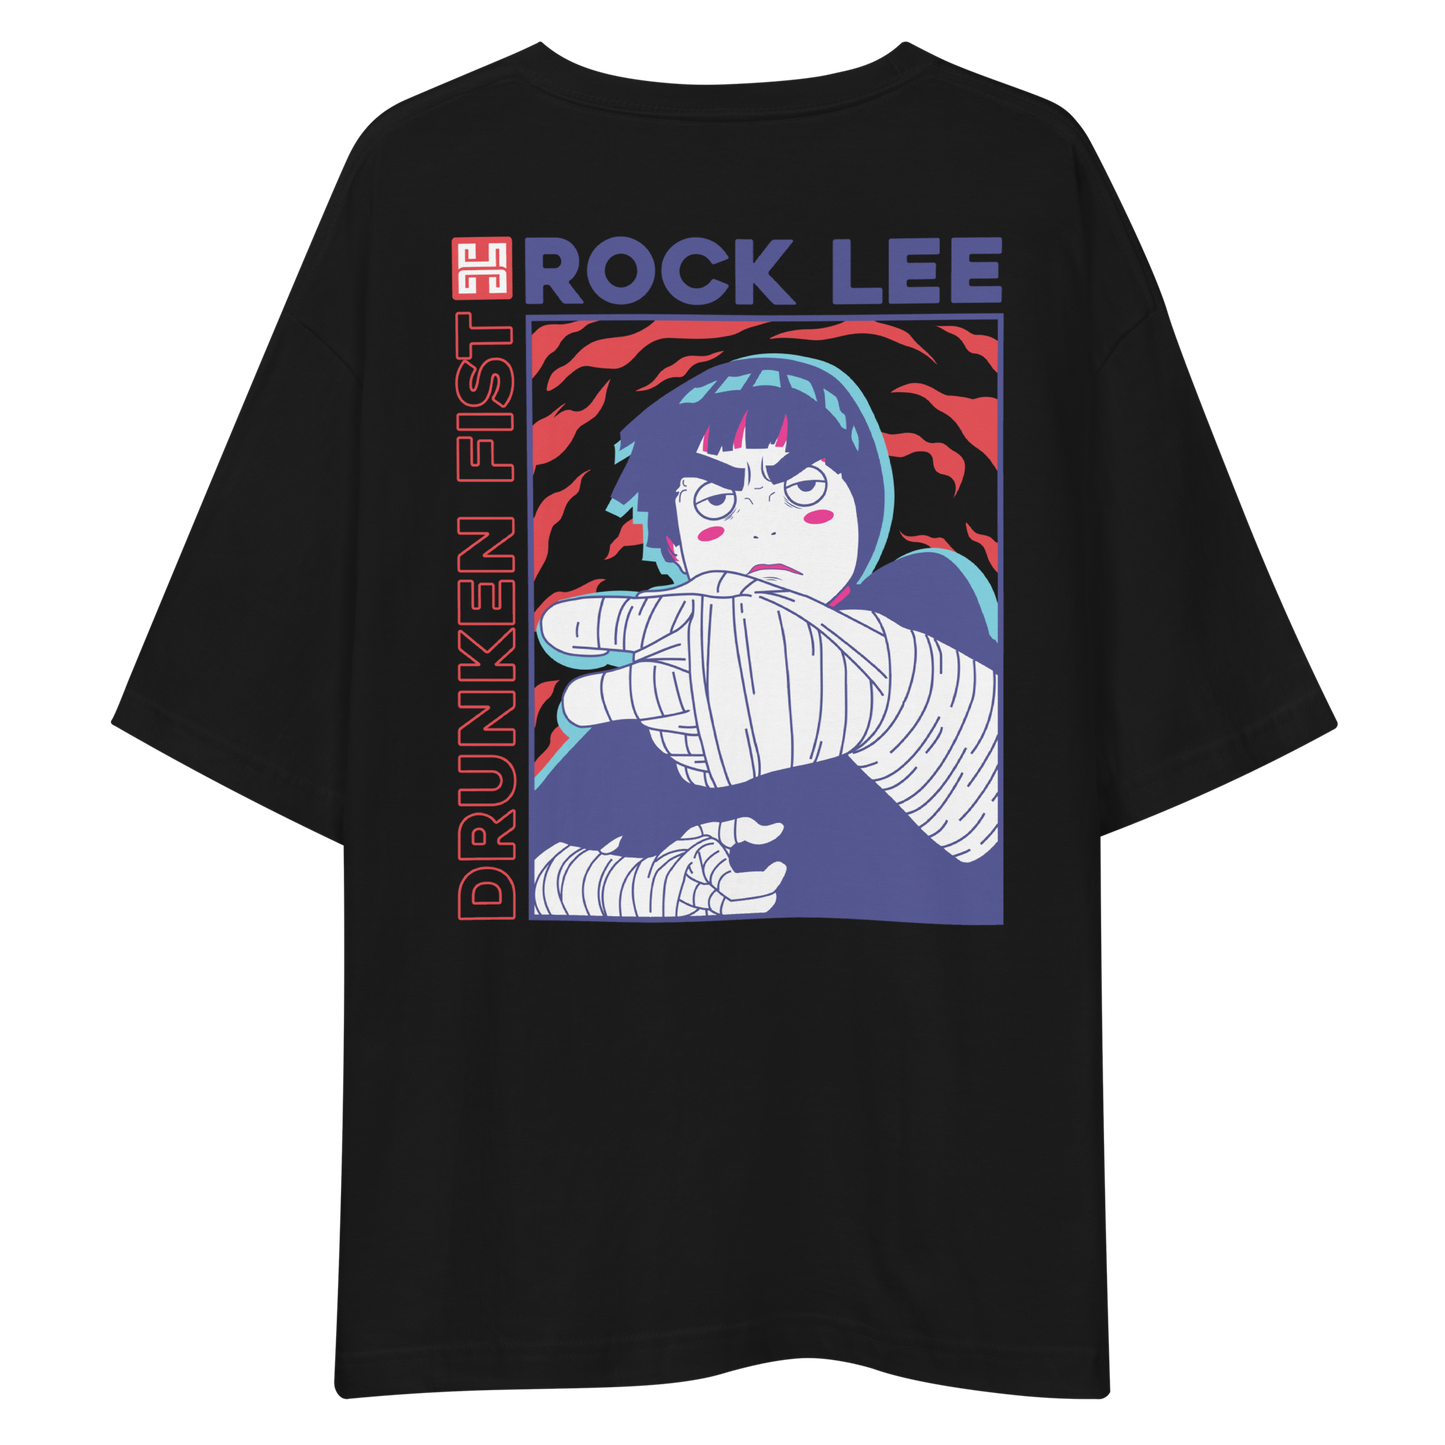 Drunken fist Rock Lee